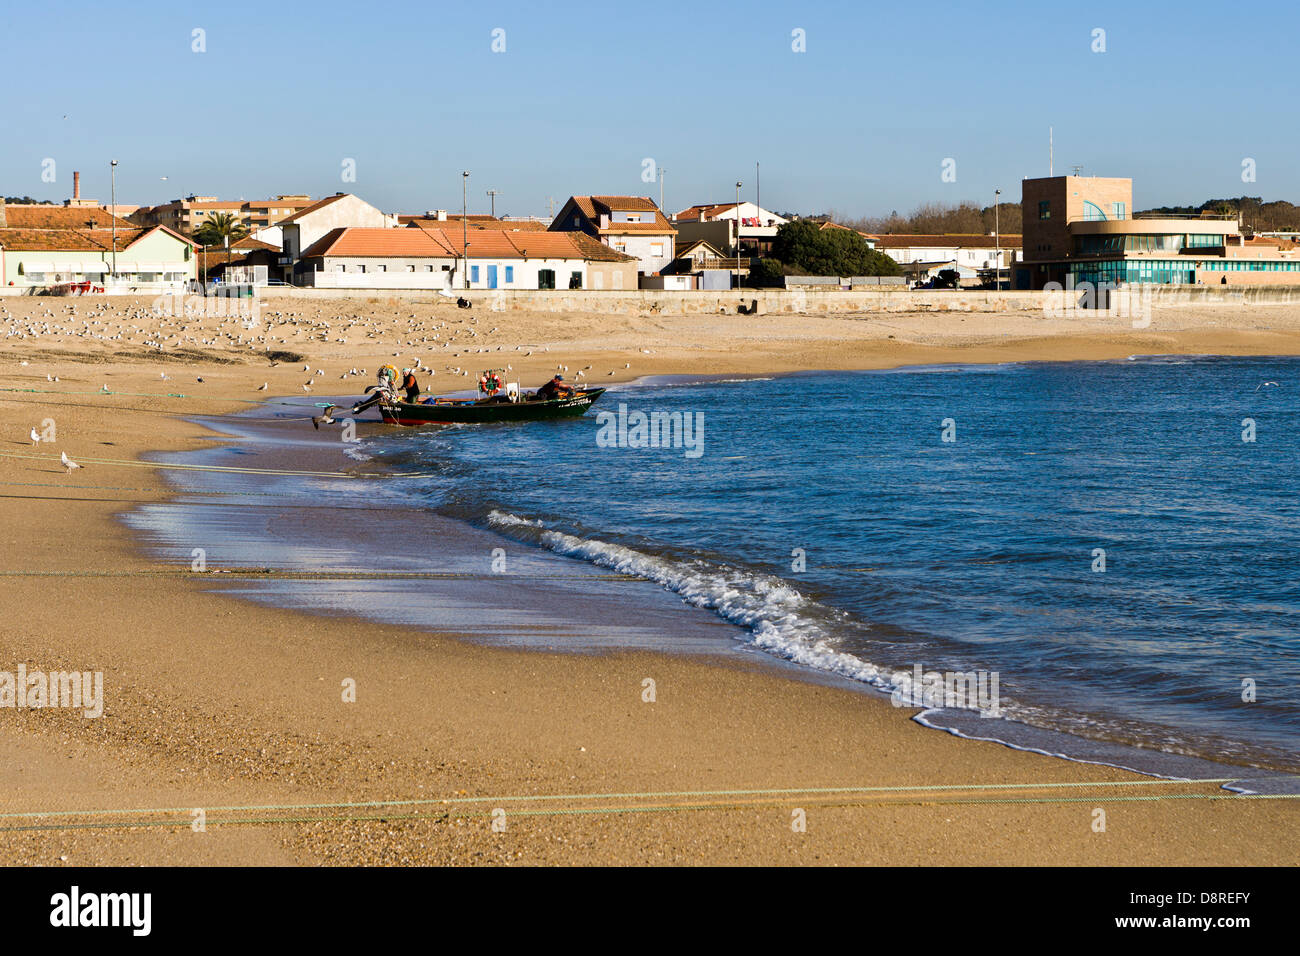 Fishboat, Aguda Portugal Stock Photo